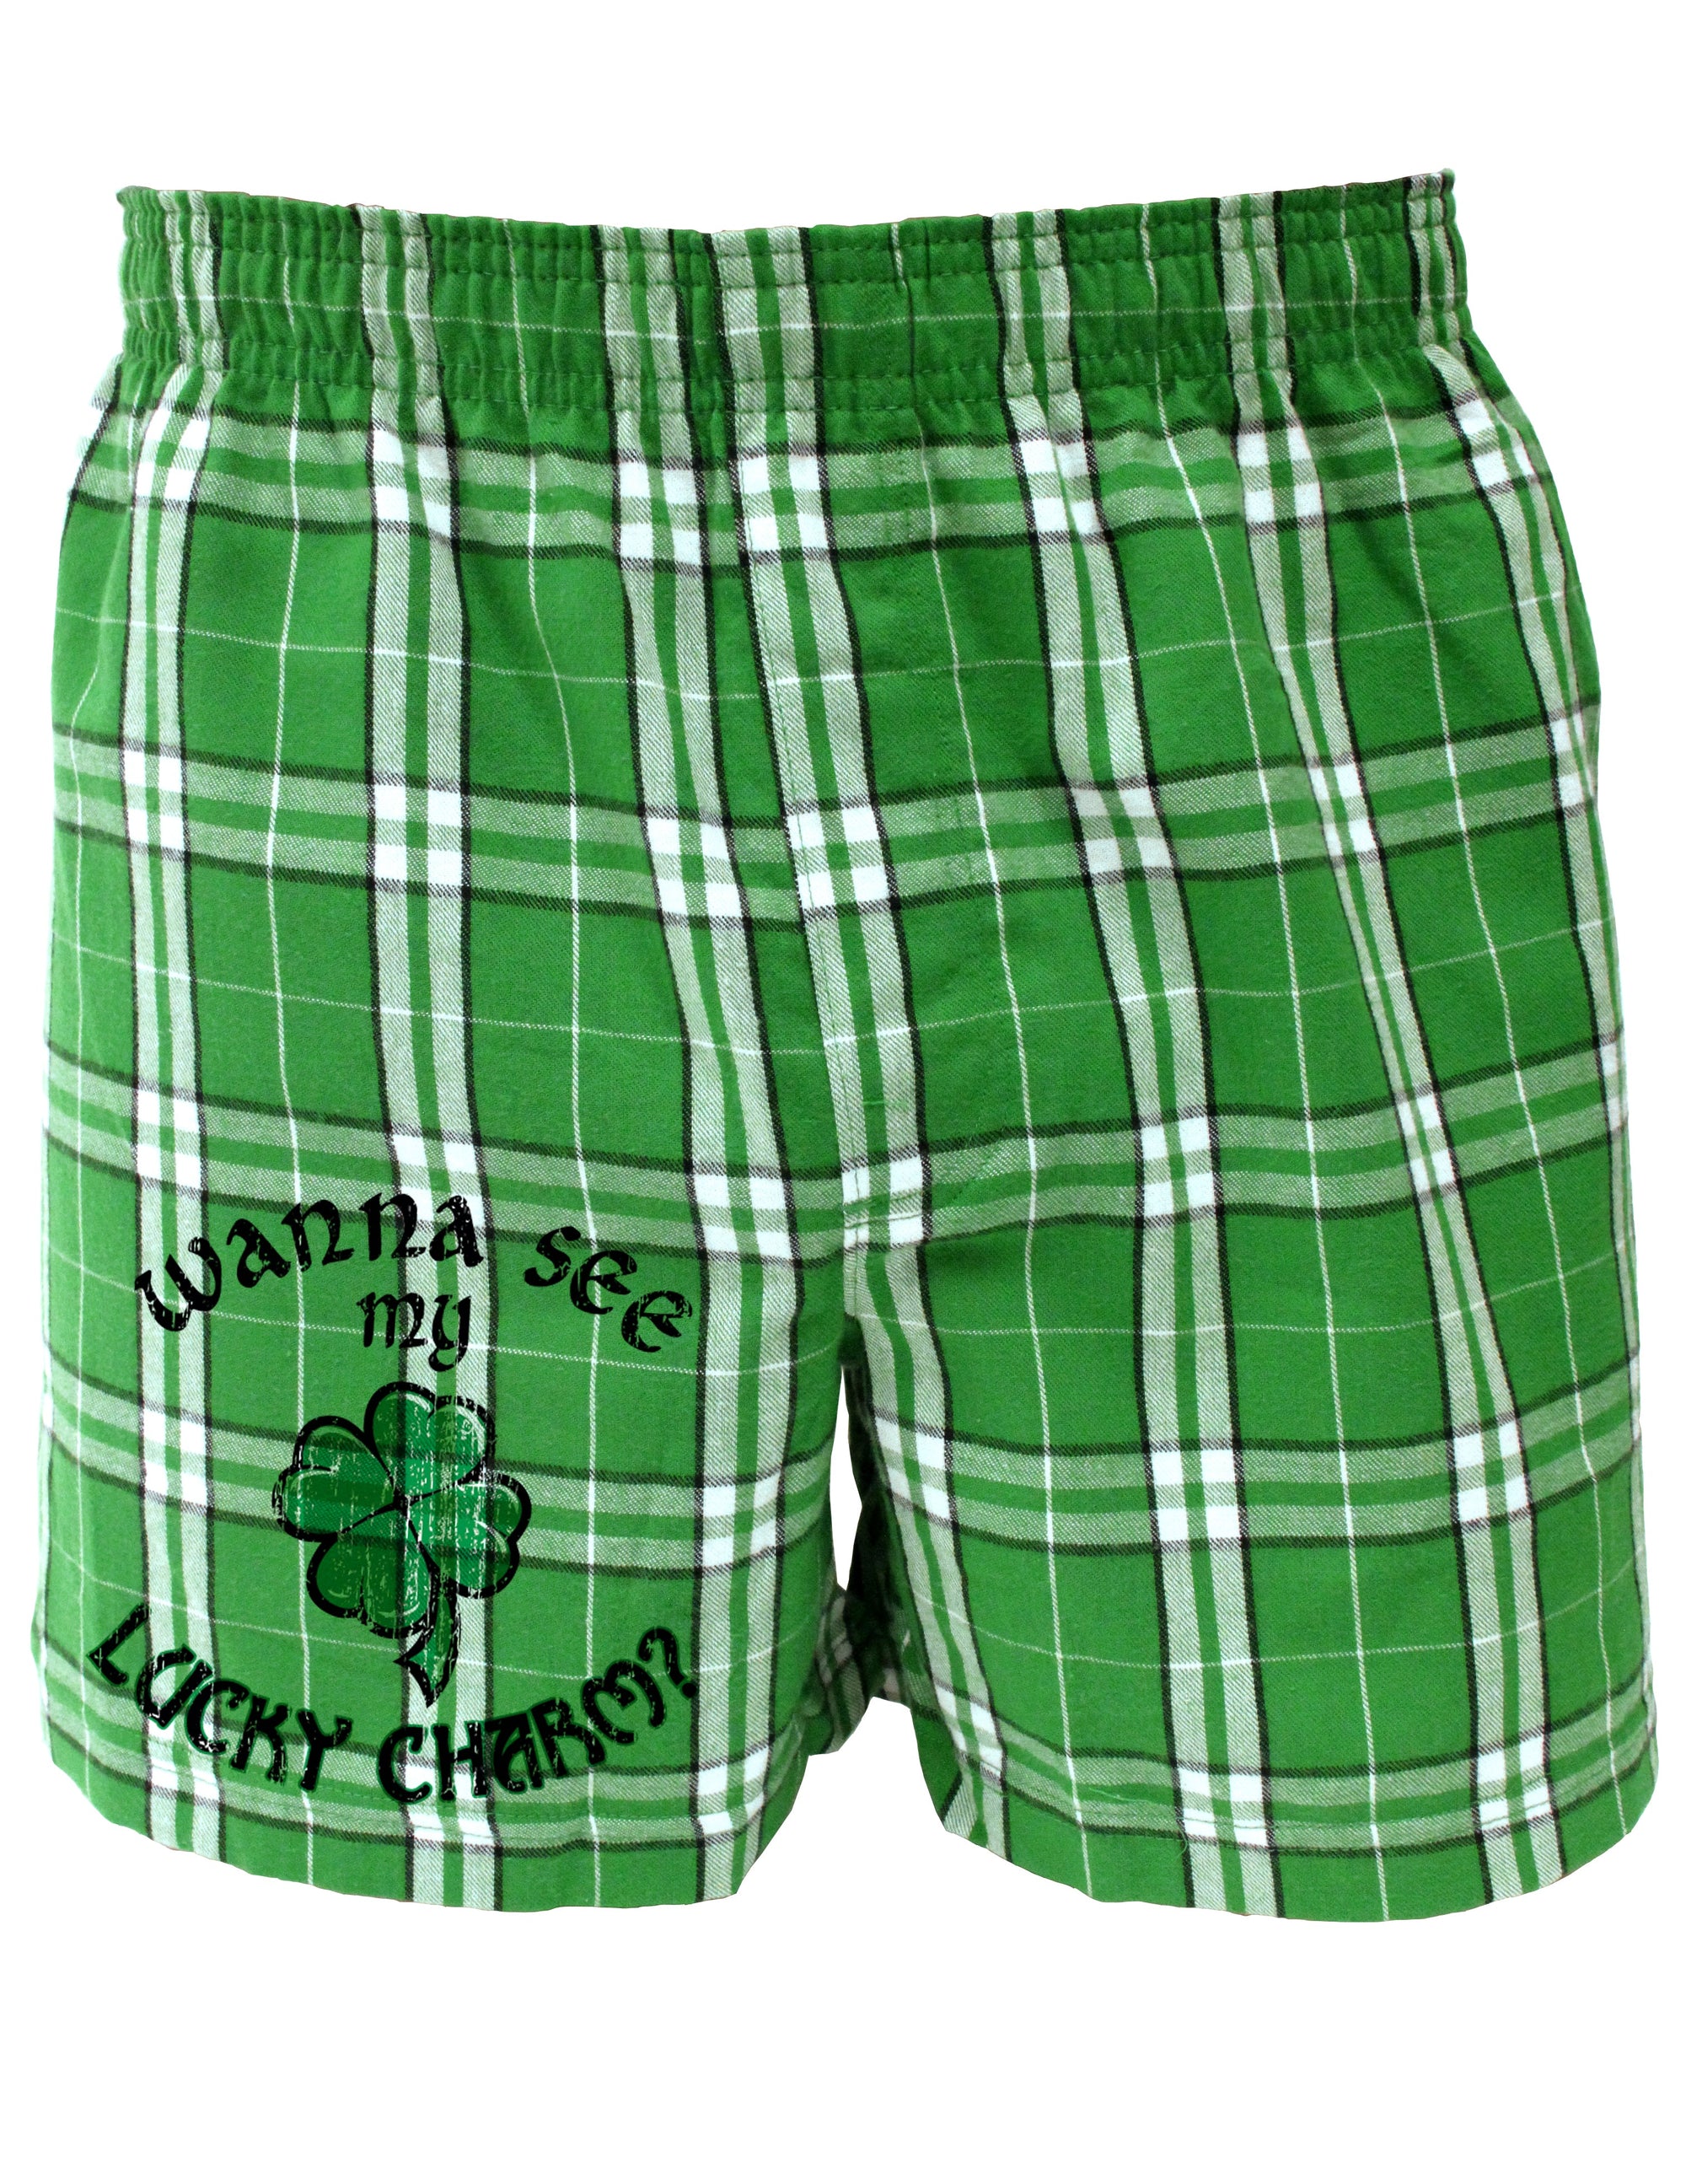 St Patricks Day Fun Men's Boxer Shorts Underwear - Choose your Print